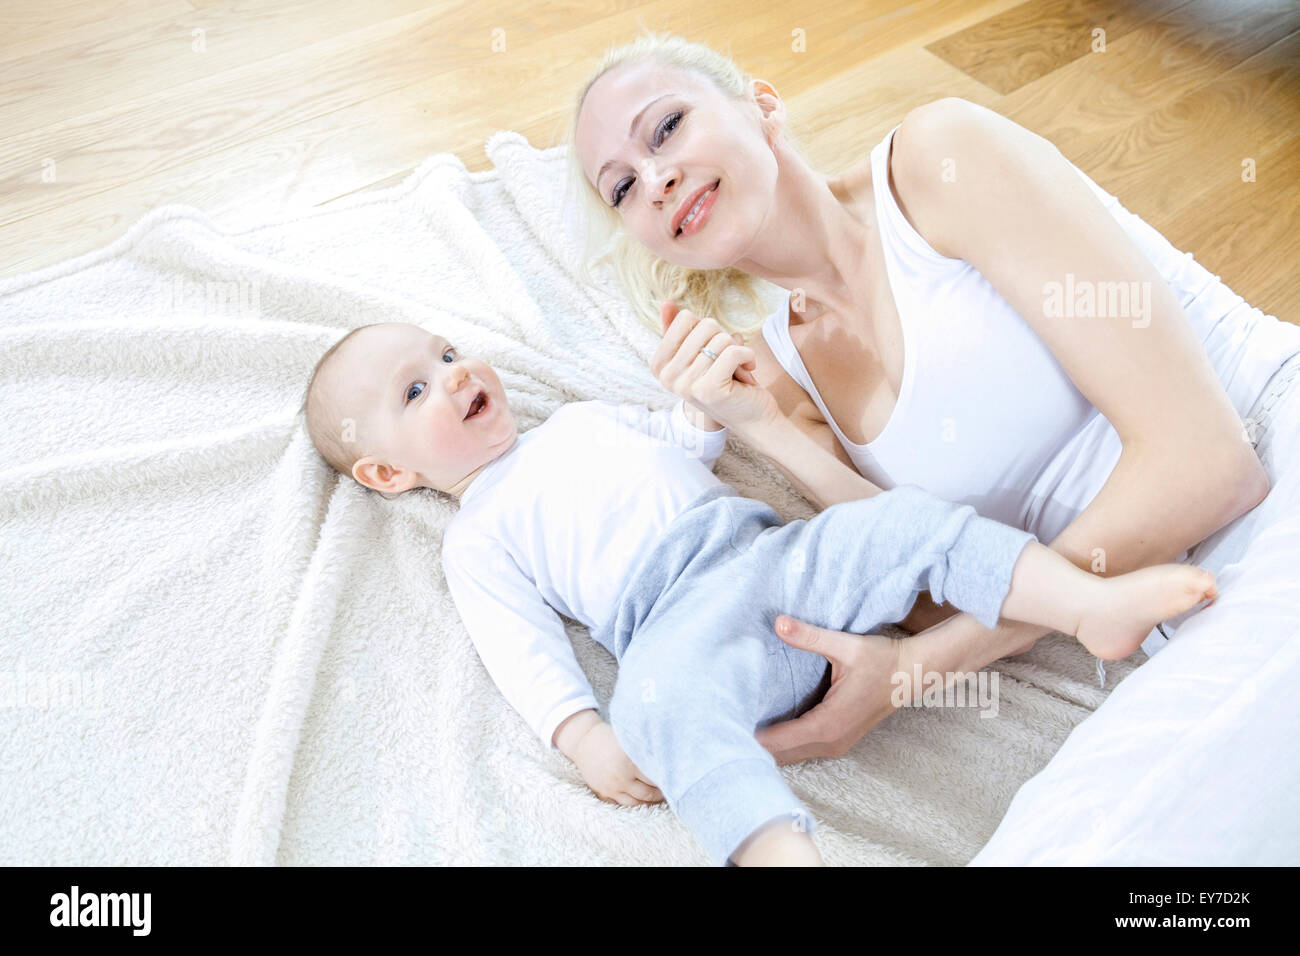 Mother and baby lying on blanket Stock Photo